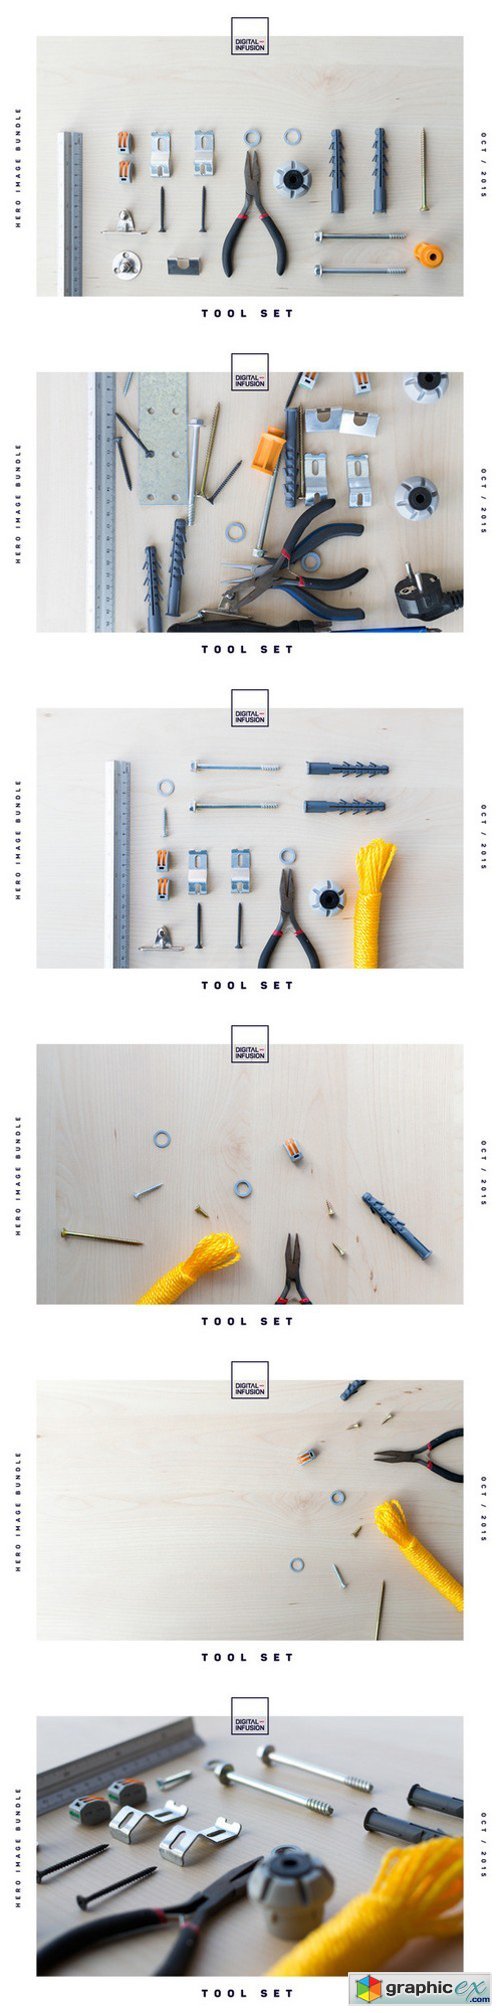 Tools Set / Hero Image Bundle